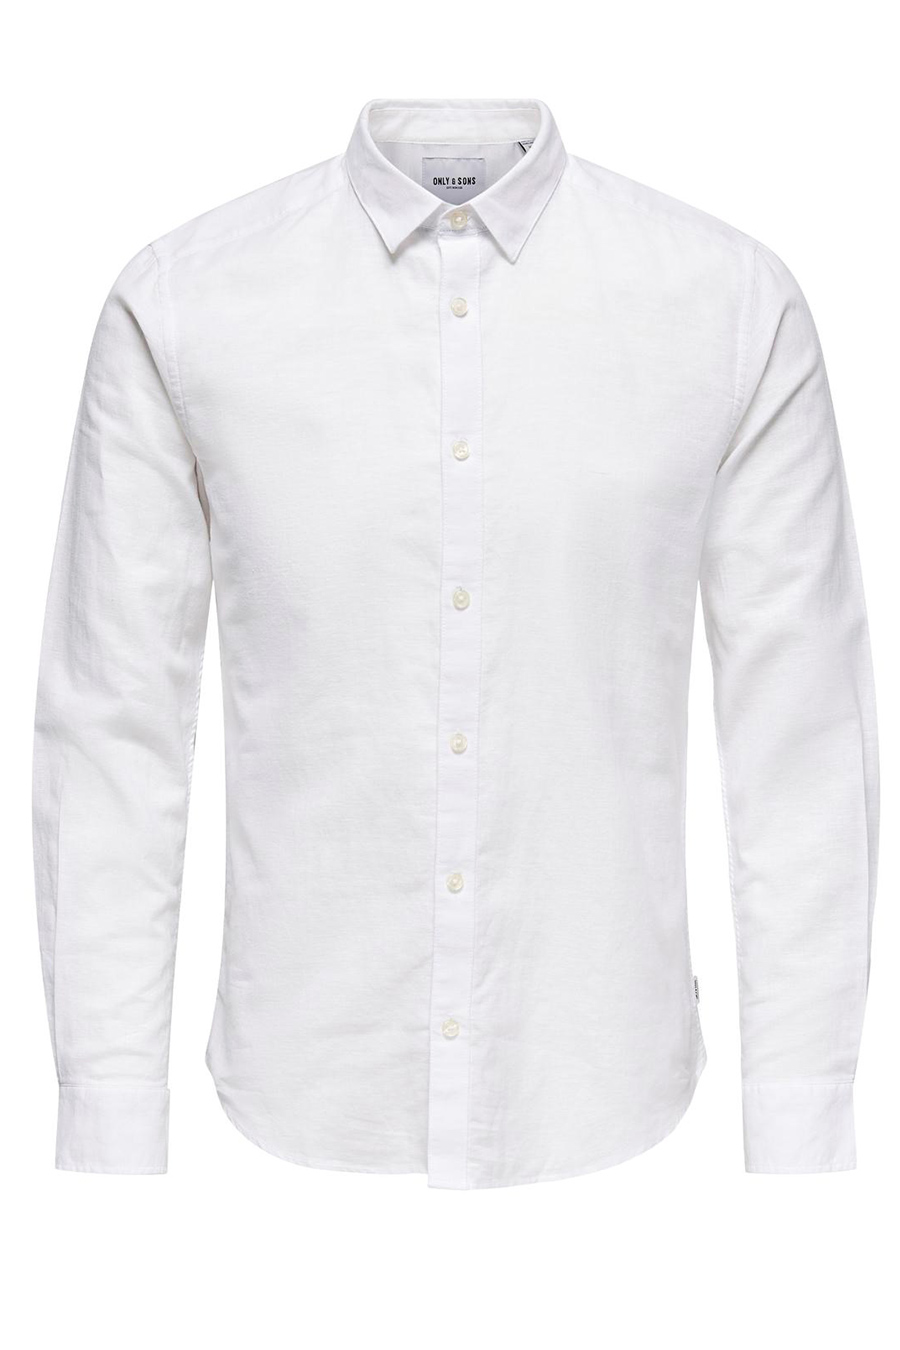 Marškiniai ONLY & SONS 22012321-White